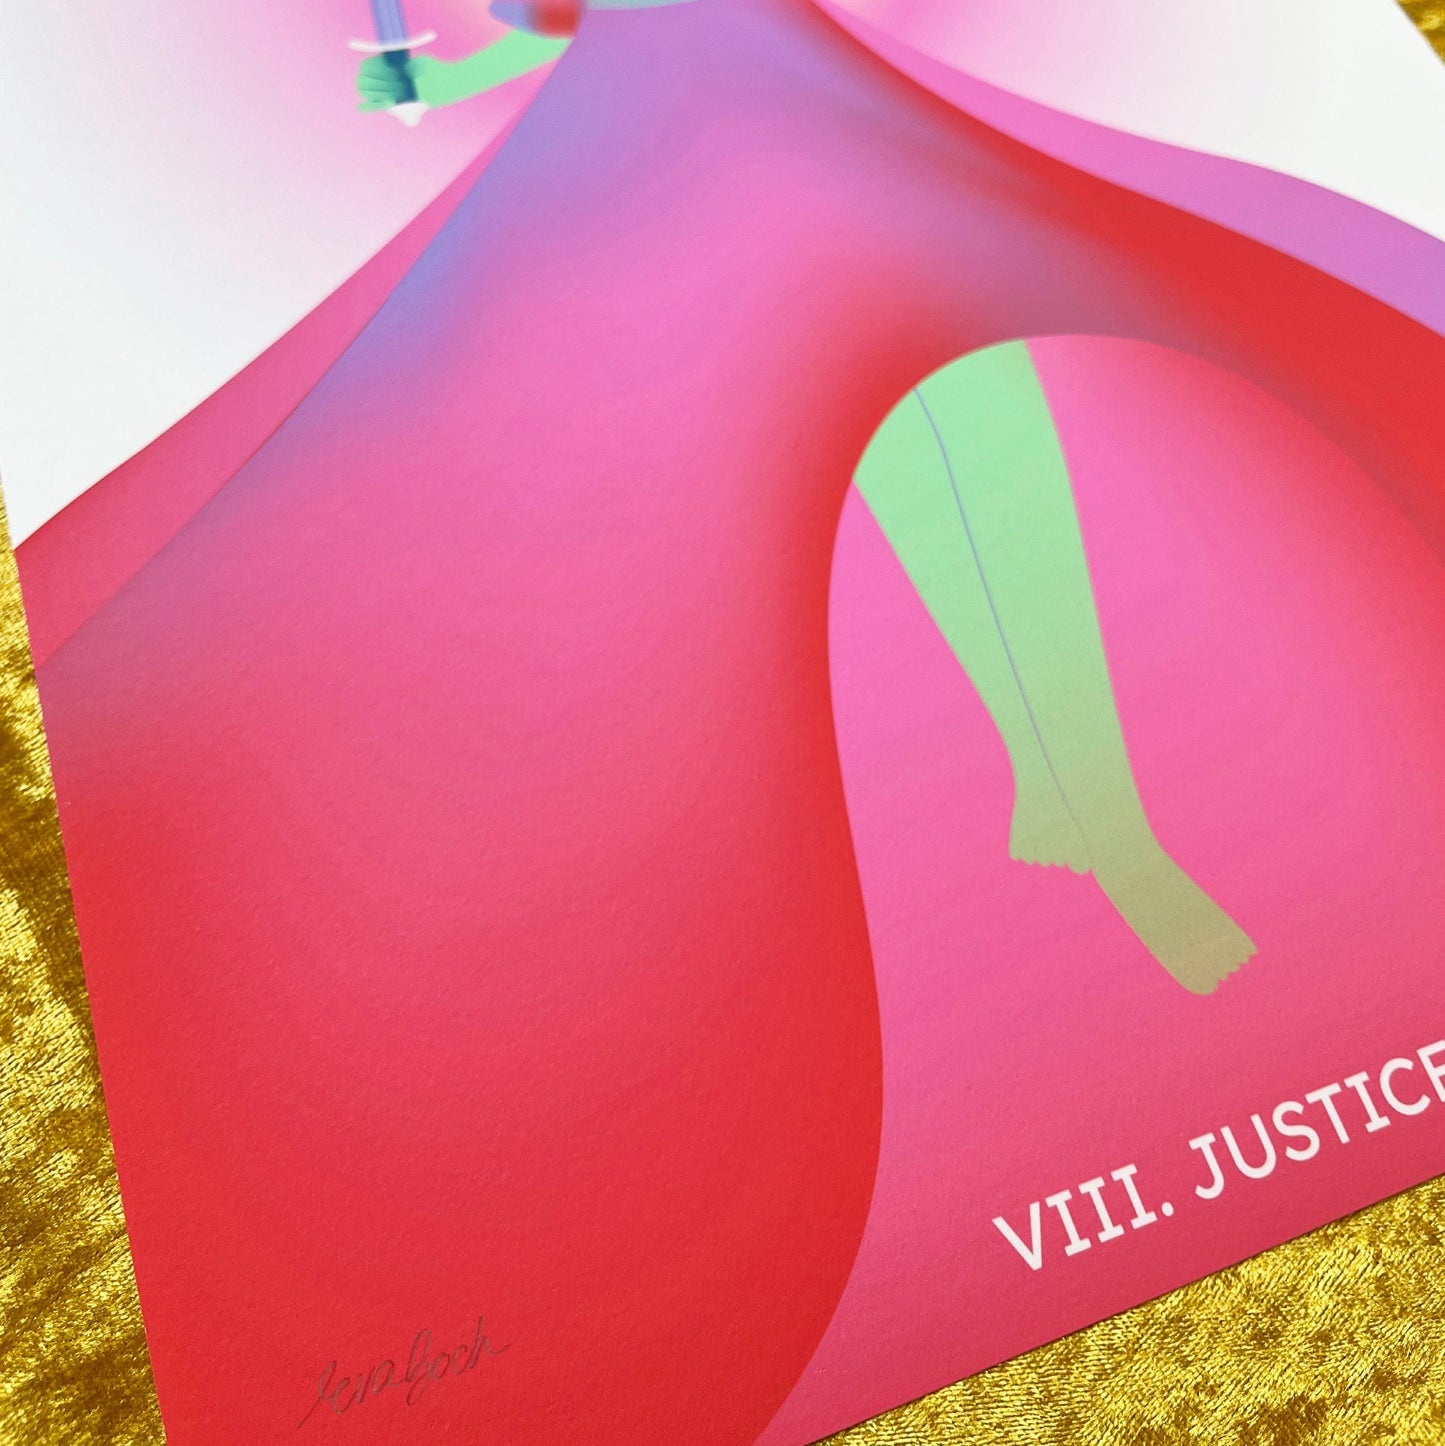 Justice Tarot Art Print, Wall Art Print, Poster, Illustration